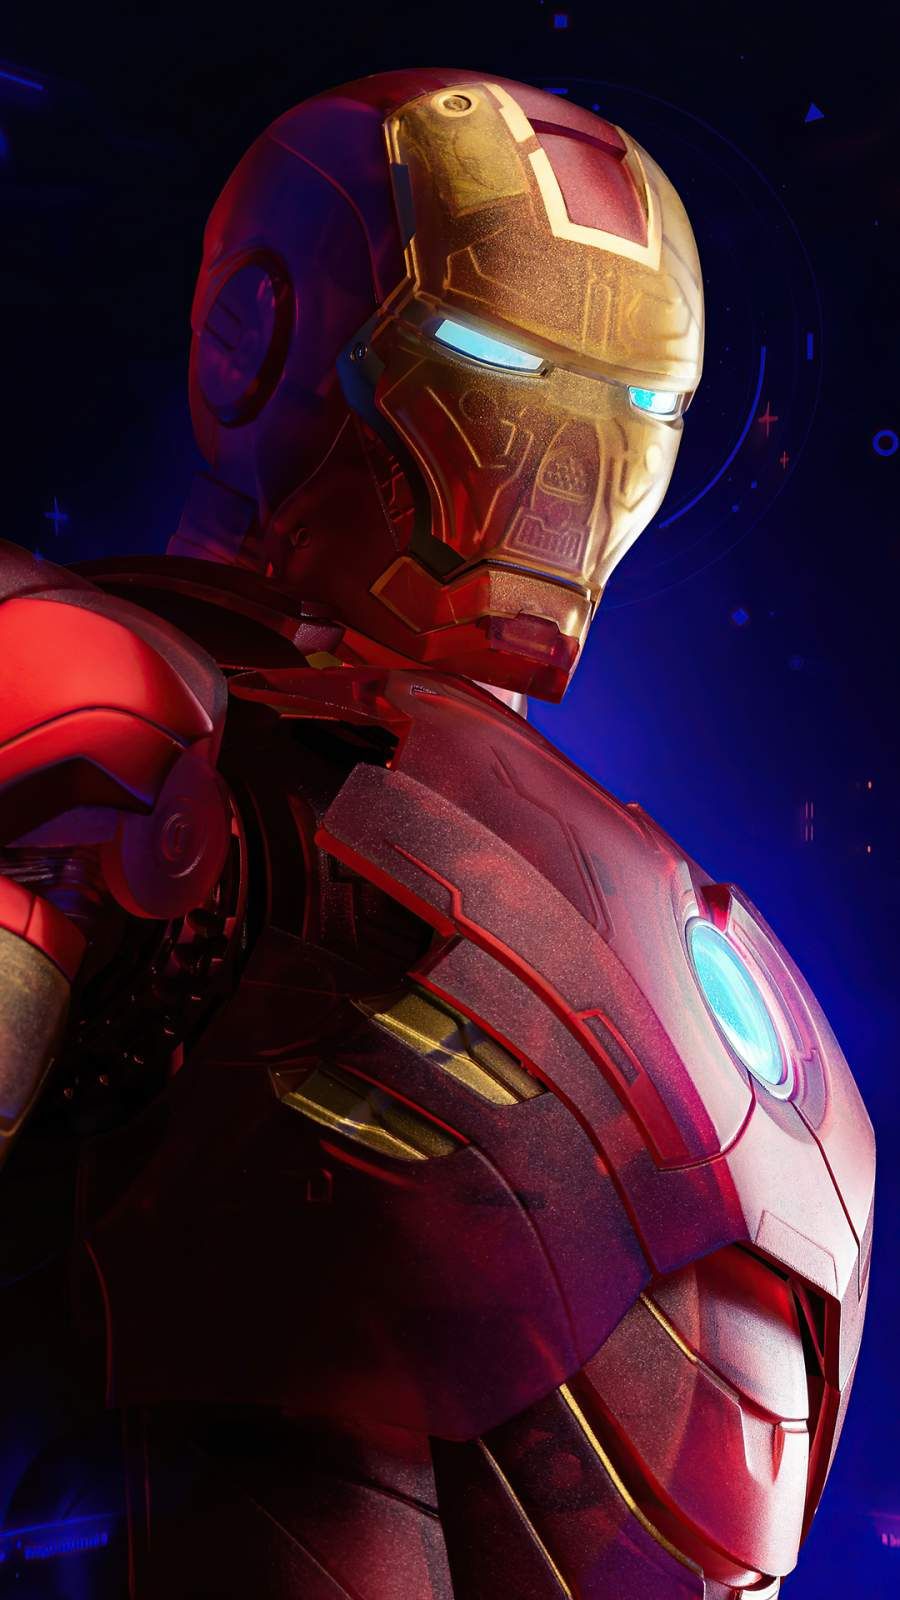 Iron Man Armour in Dark iPhone Wallpaper Wallpaper, iPhone Wallpaper. Iron man, Iron man fan art, Iron man HD wallpaper